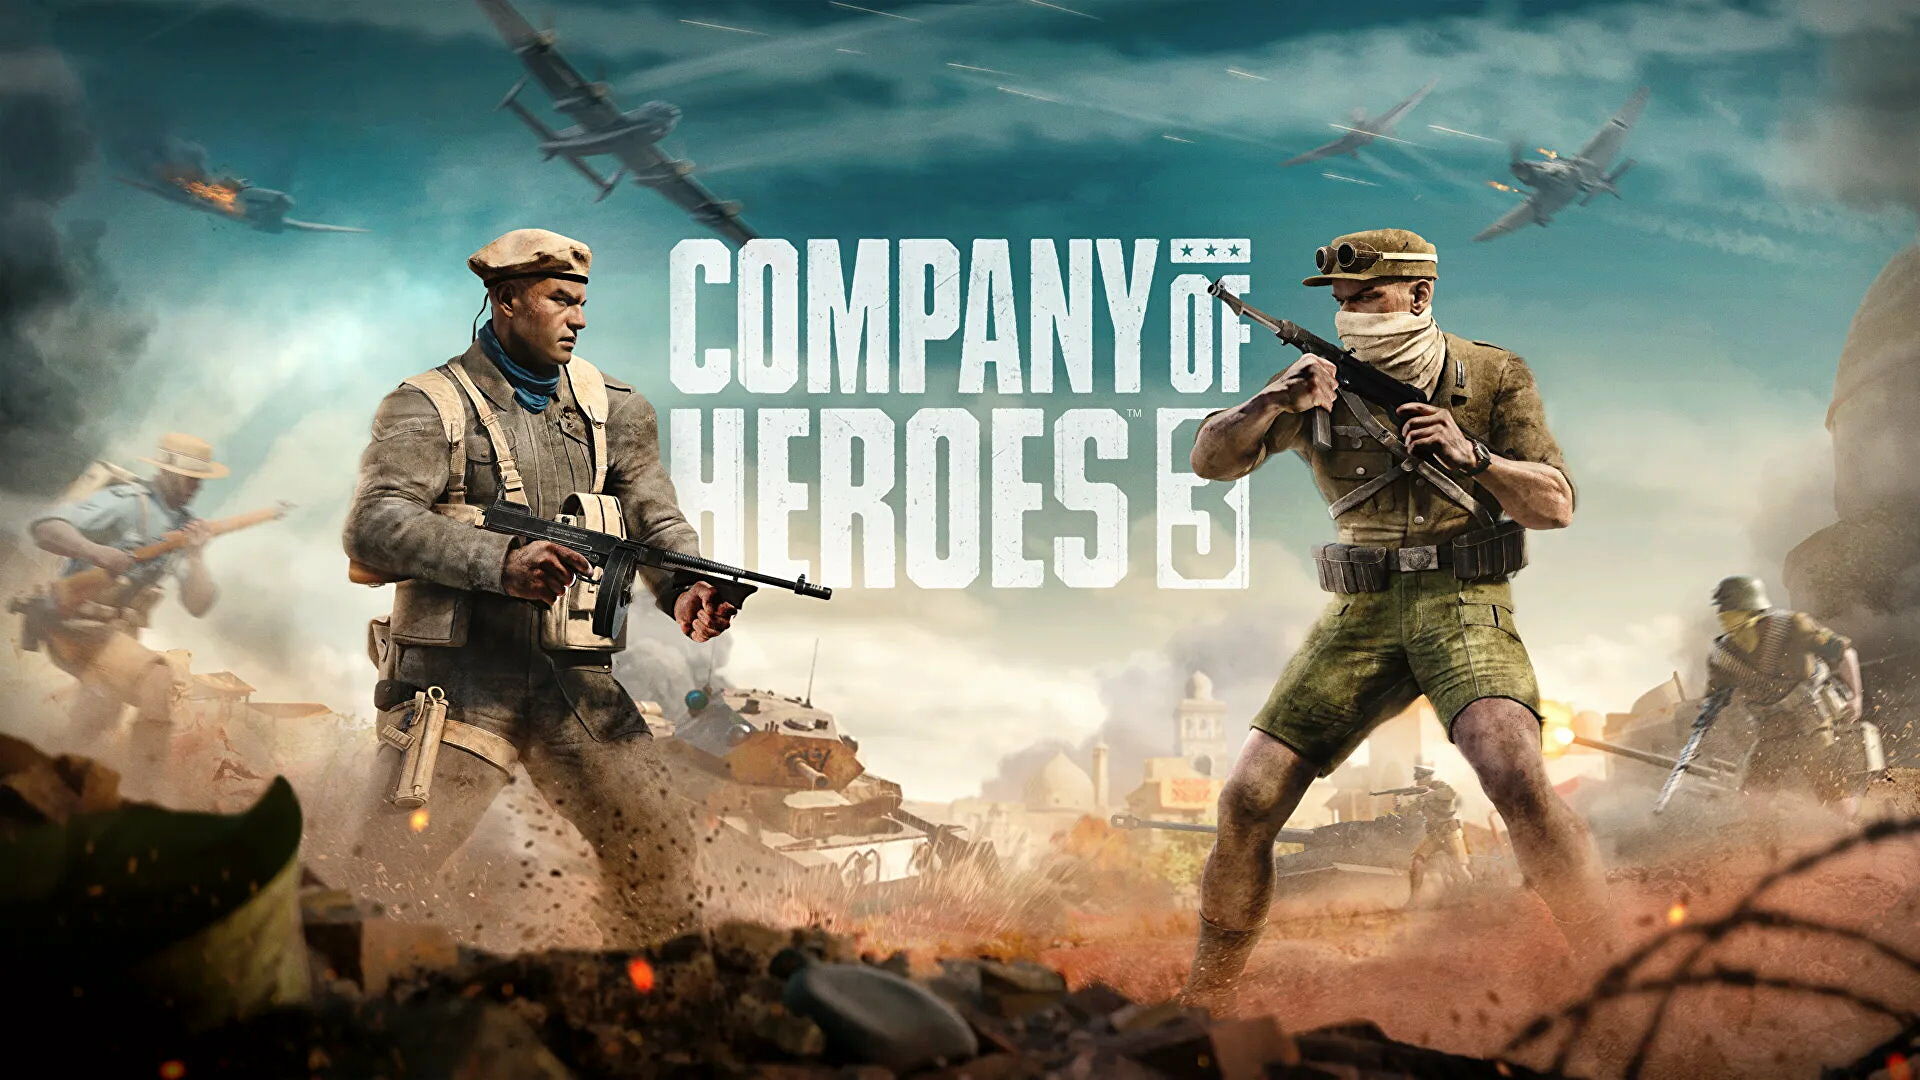 company of heroes 3 har skjutits upp!